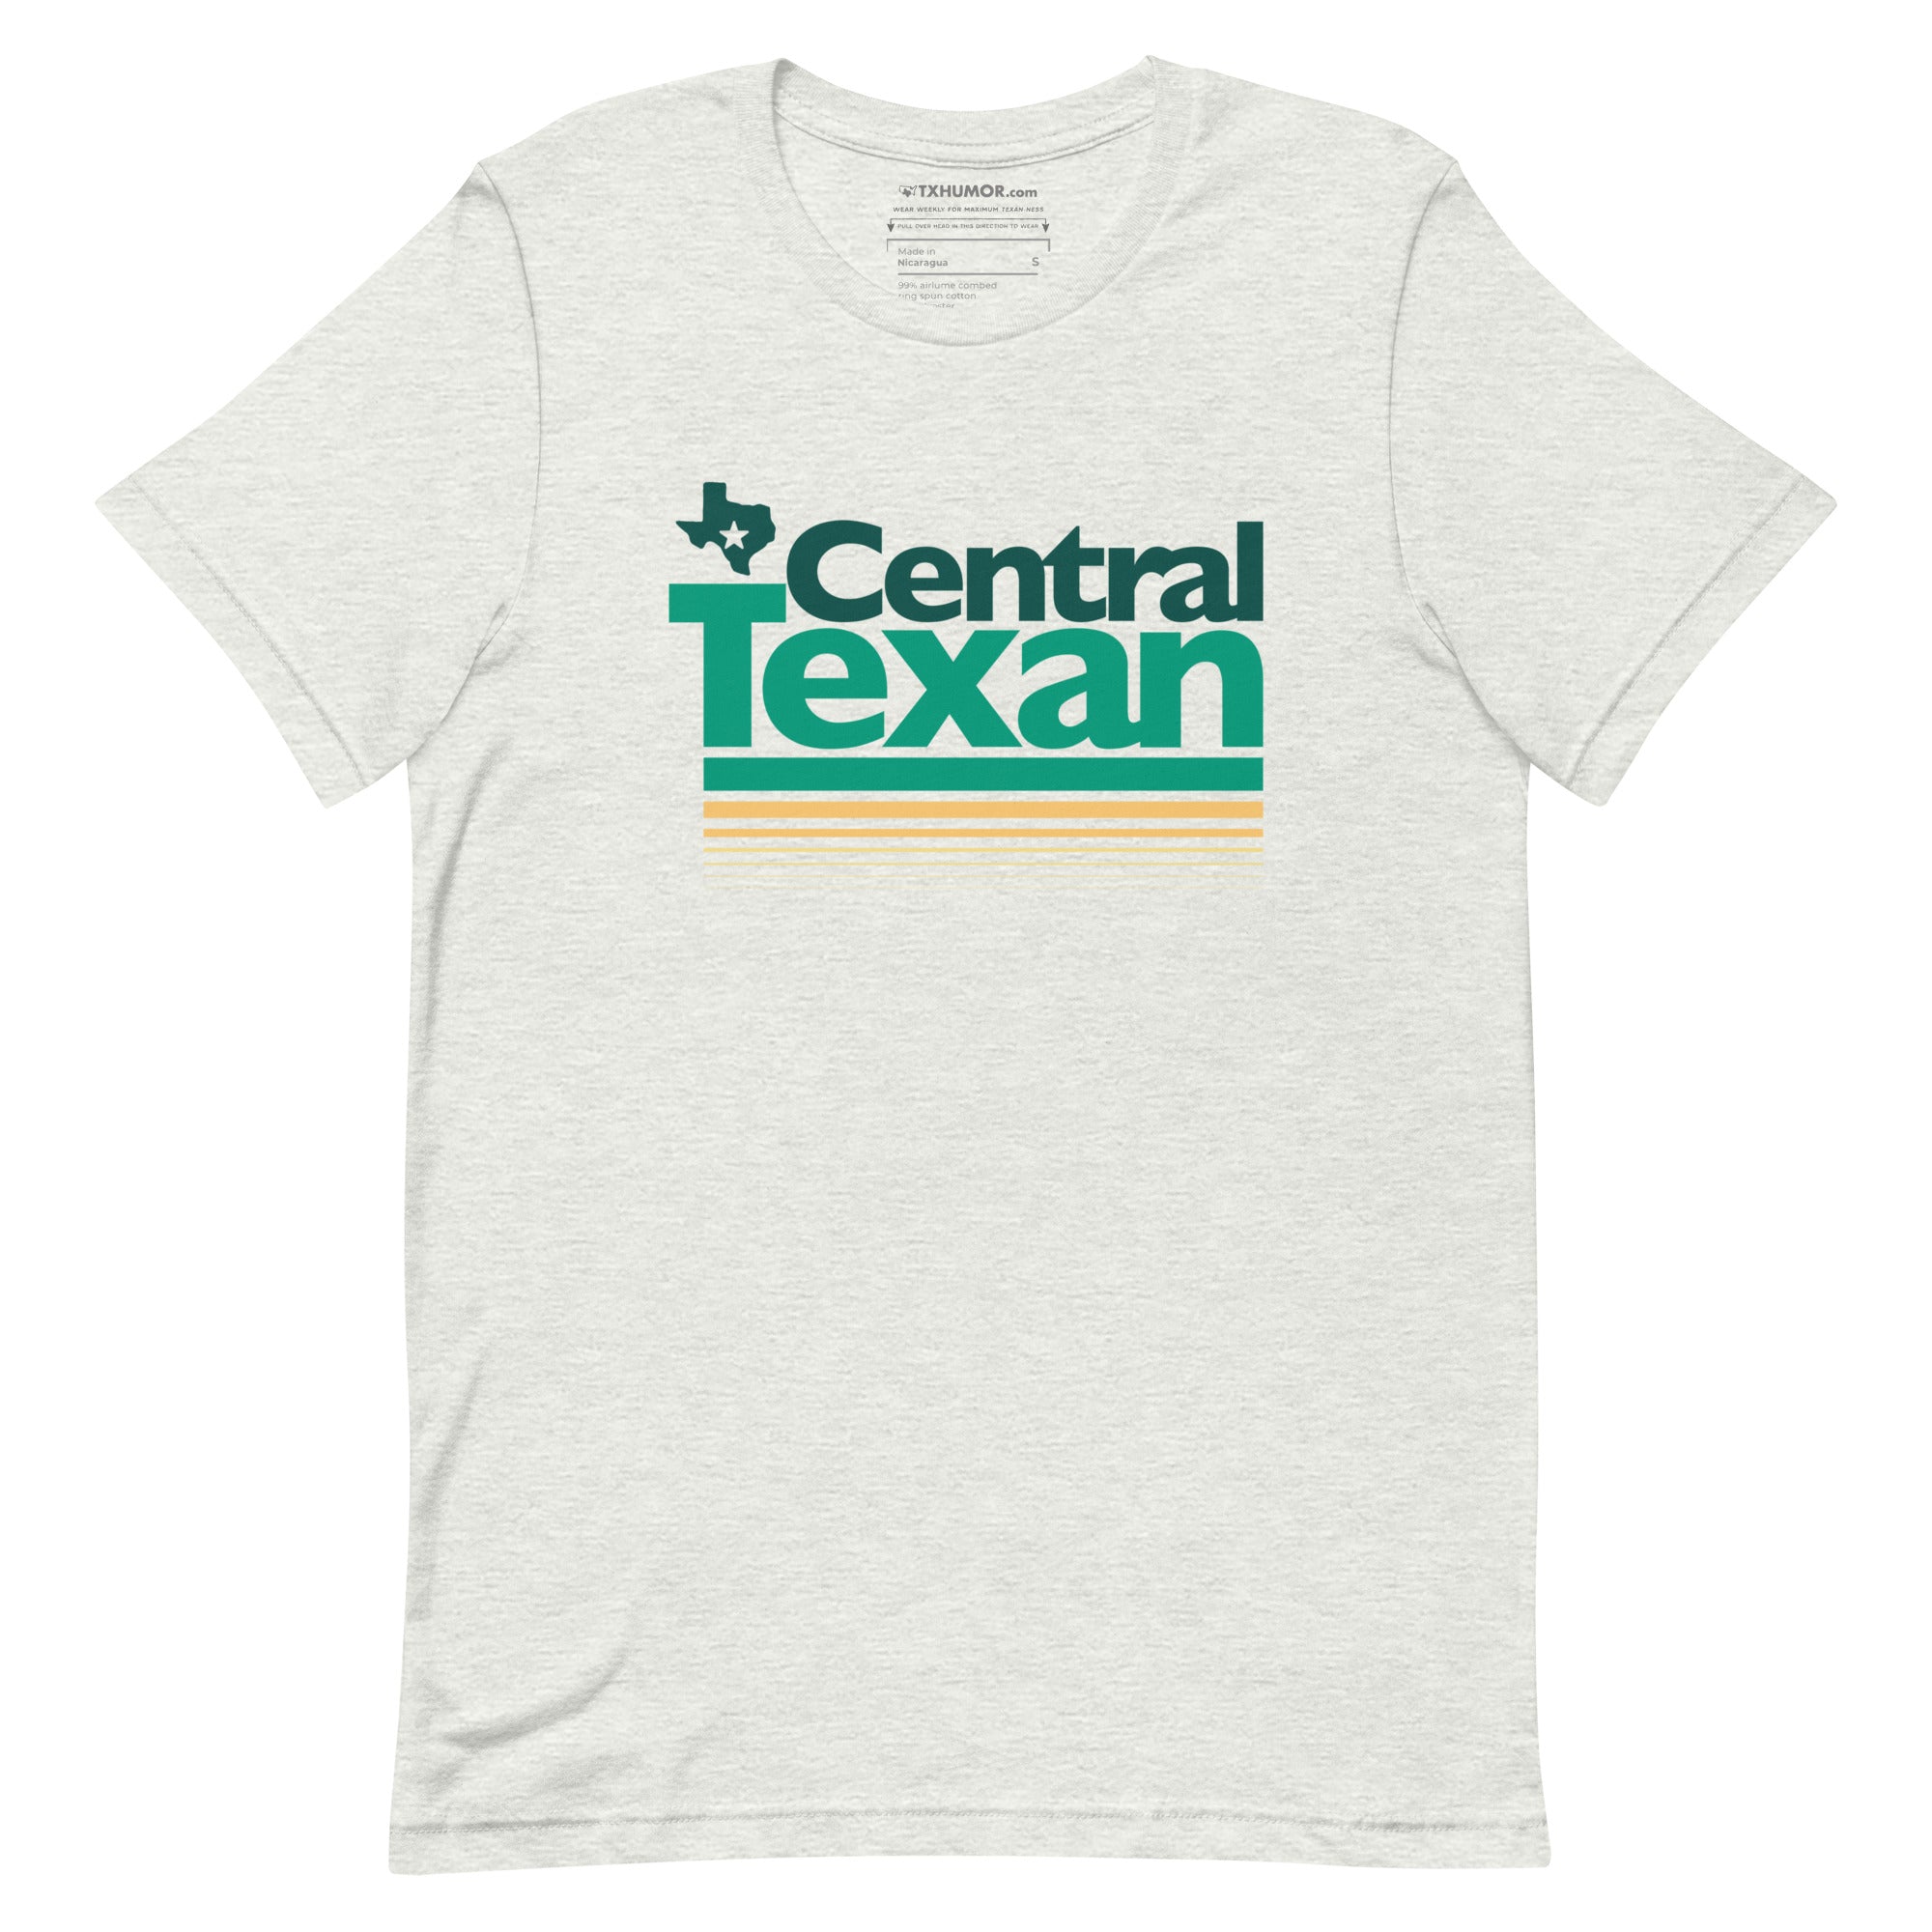 Central Texan T-shirt